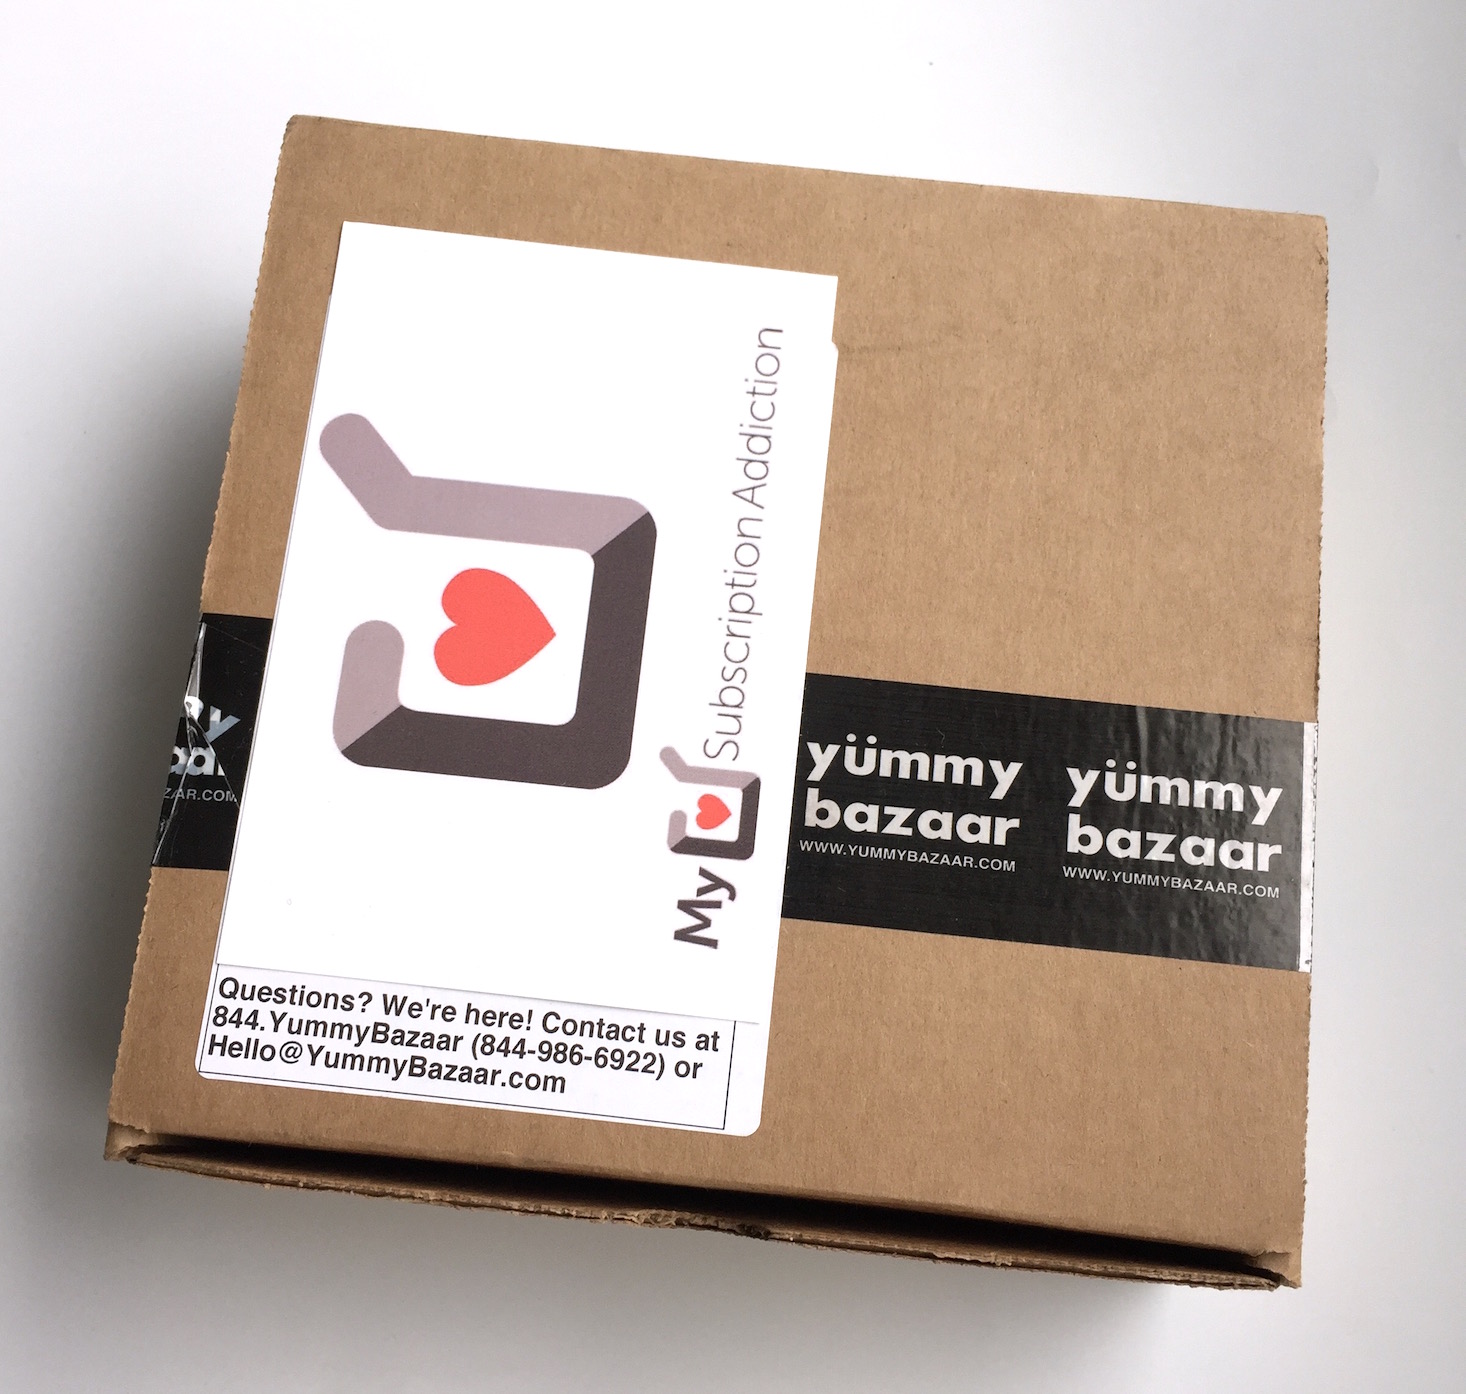 Yummy Bazaar Destination Food Club Sampler Box Review- September 2016